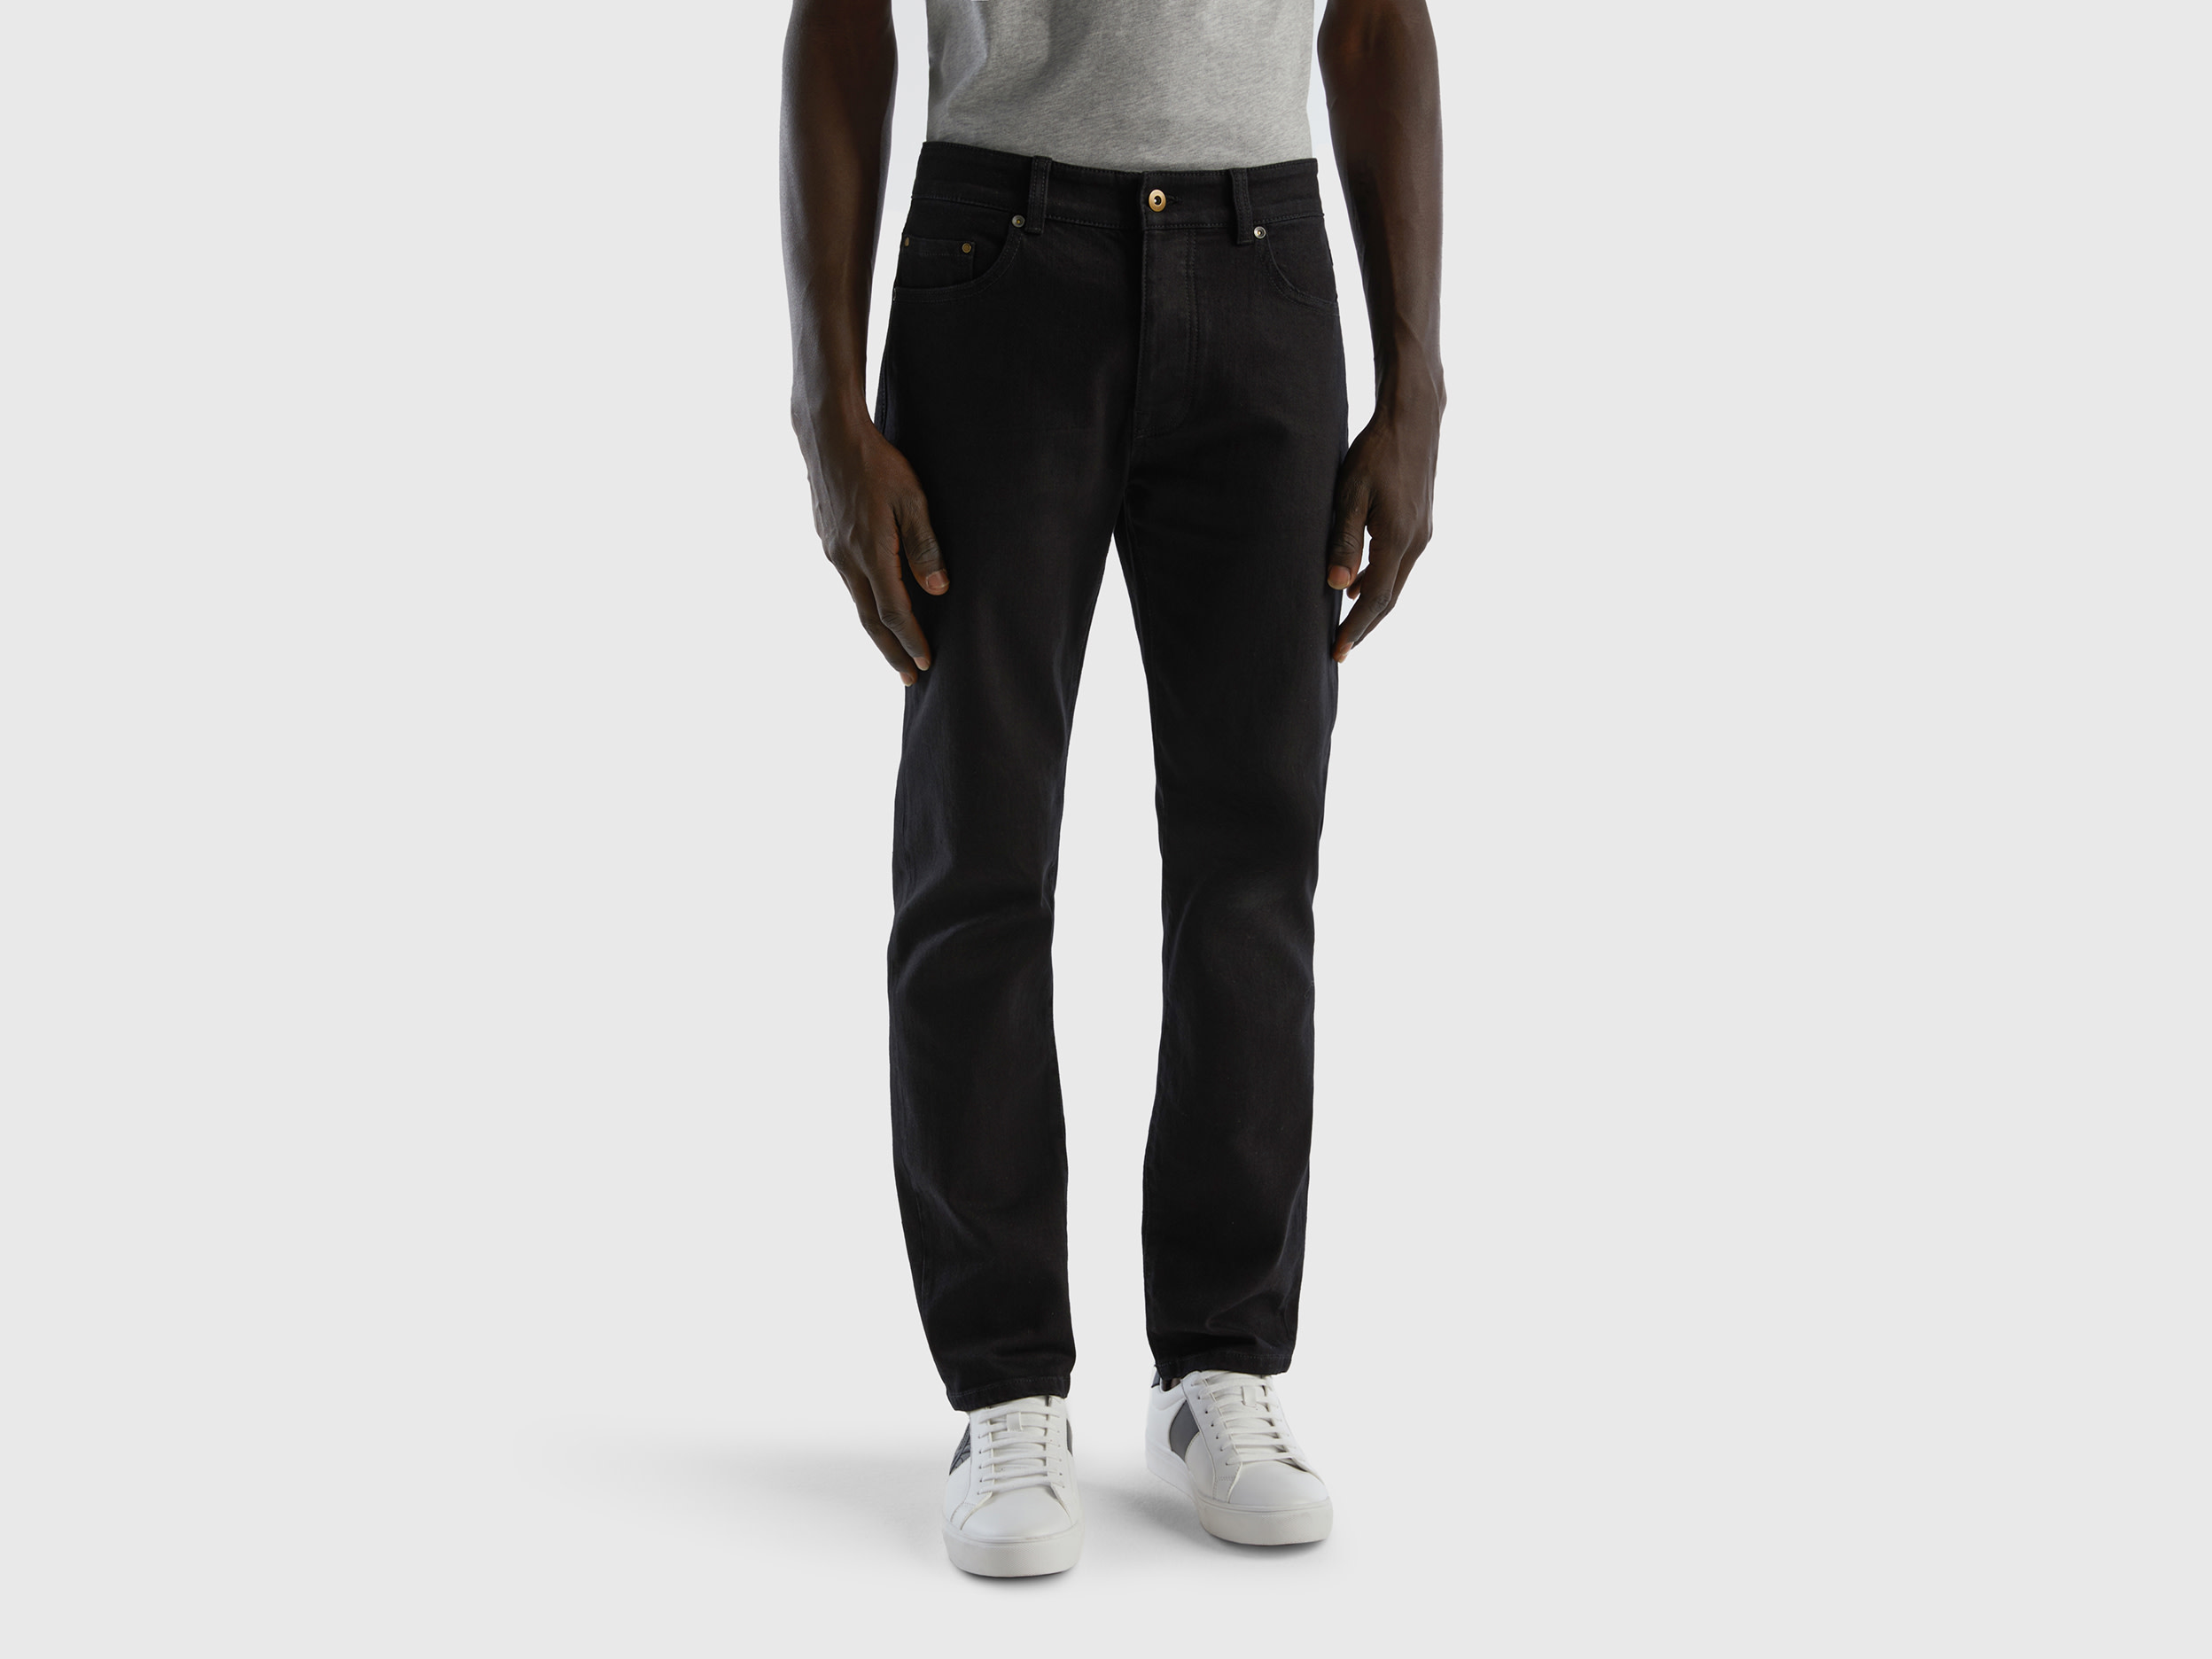 Benetton, Five Pocket Slim Fit Jeans, size 29, Black, Men